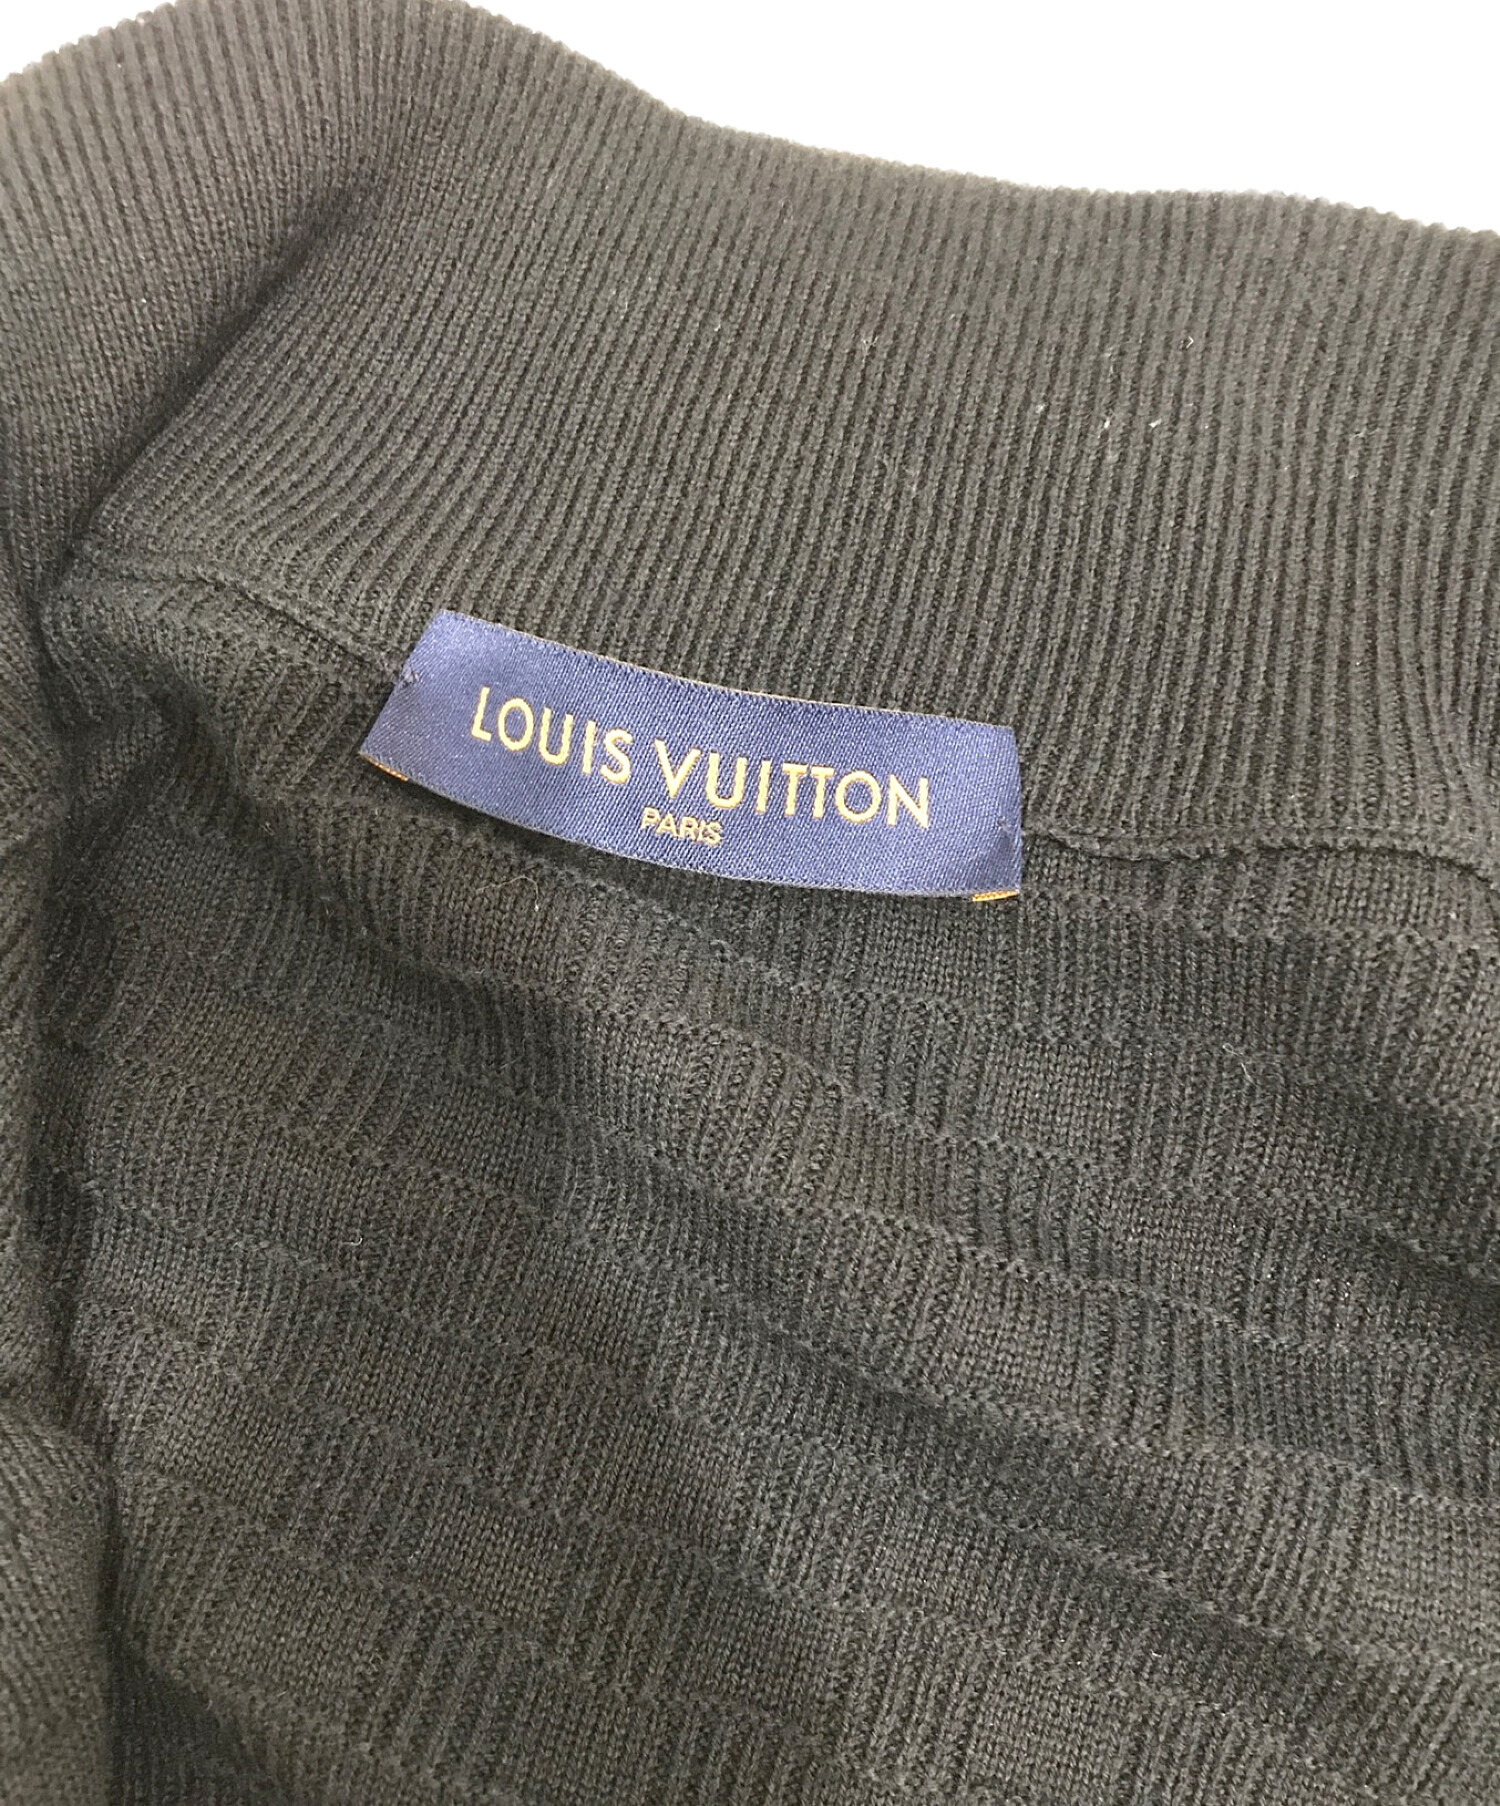 LOUIS VUITTON (ルイ ヴィトン) ニットジャケット ブラック サイズ:XL